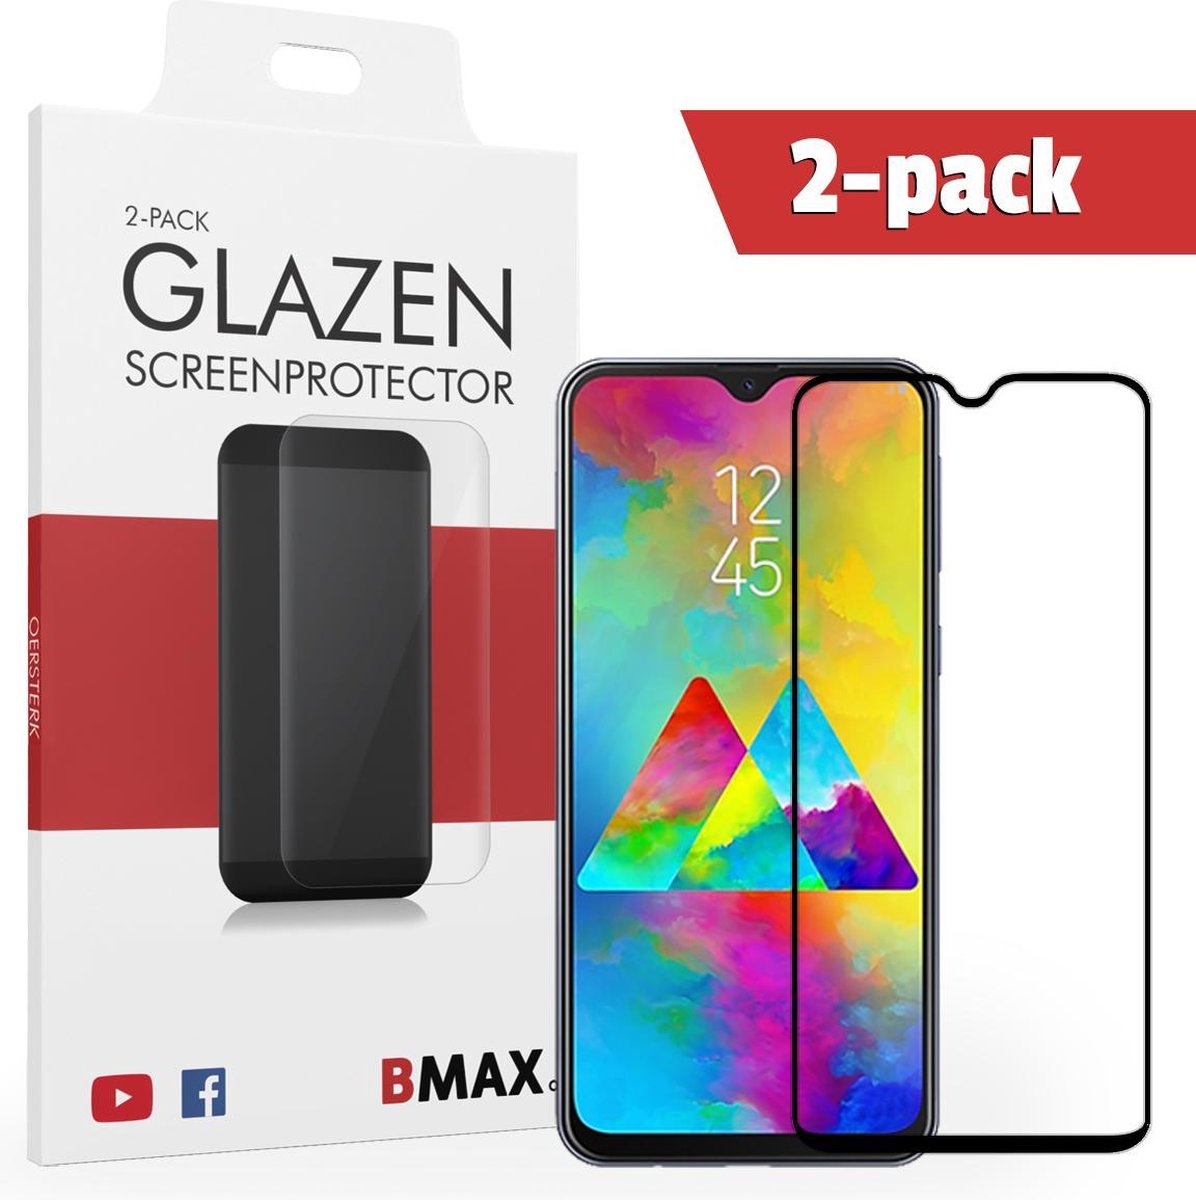 2-pack Bmax Samsung Galaxy M20 Screenprotector - Glass - Full Cover 2.5d - Black